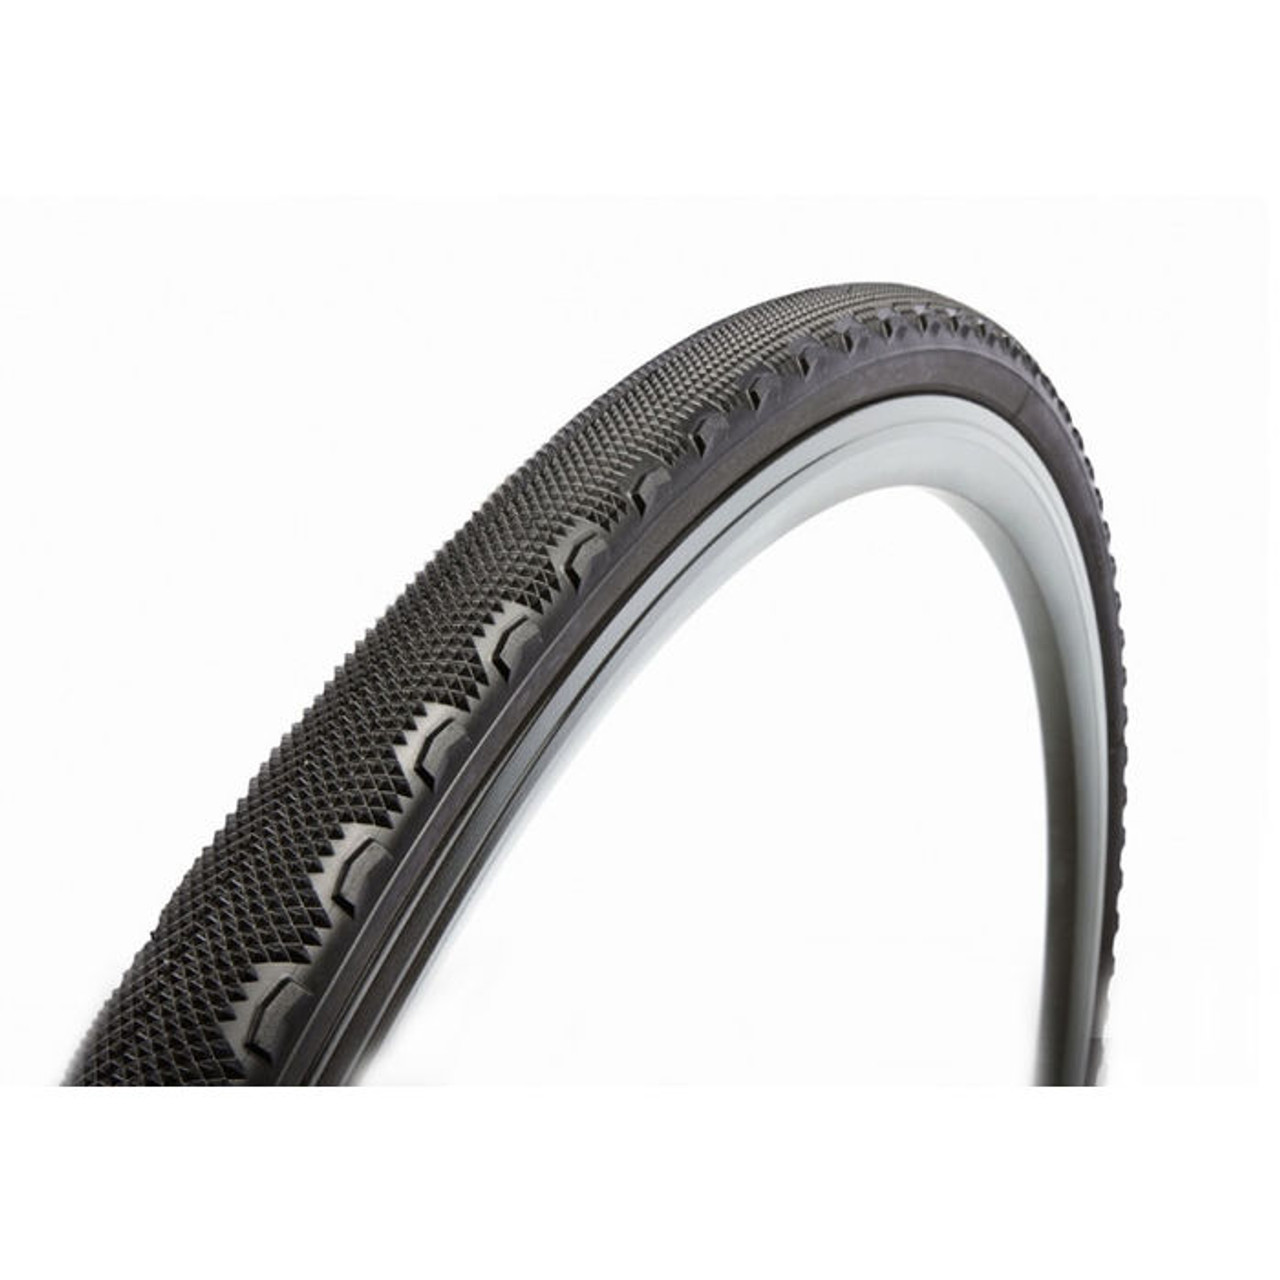 Vittoria Cross Evo XN II Cyclo Cross Tubular Tyre For Hard Conditions 700 x 32mm